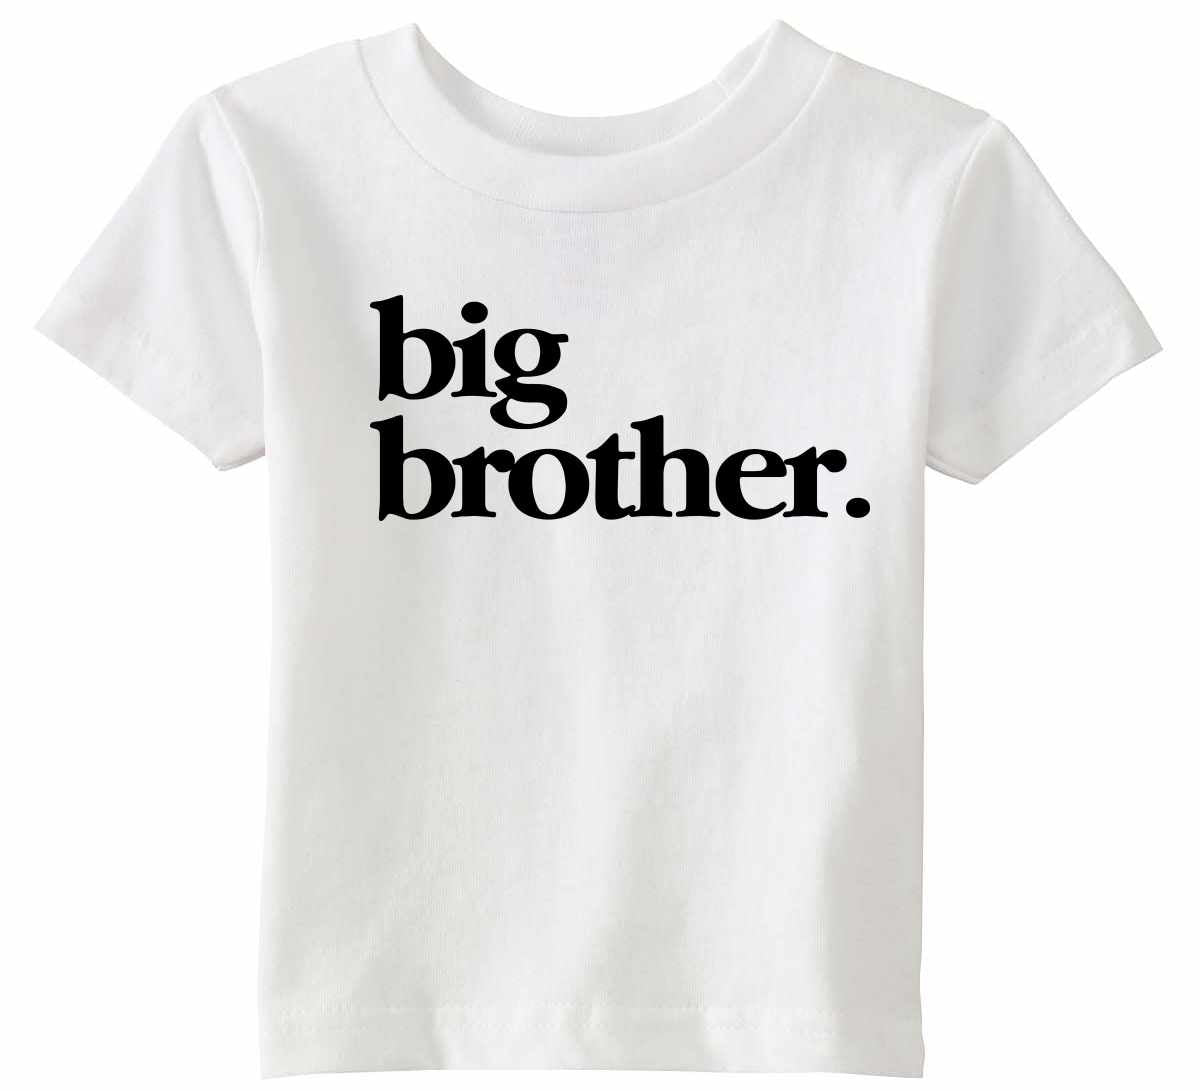 Big Brother on Infant-Toddler T-Shirt (#1320-7)